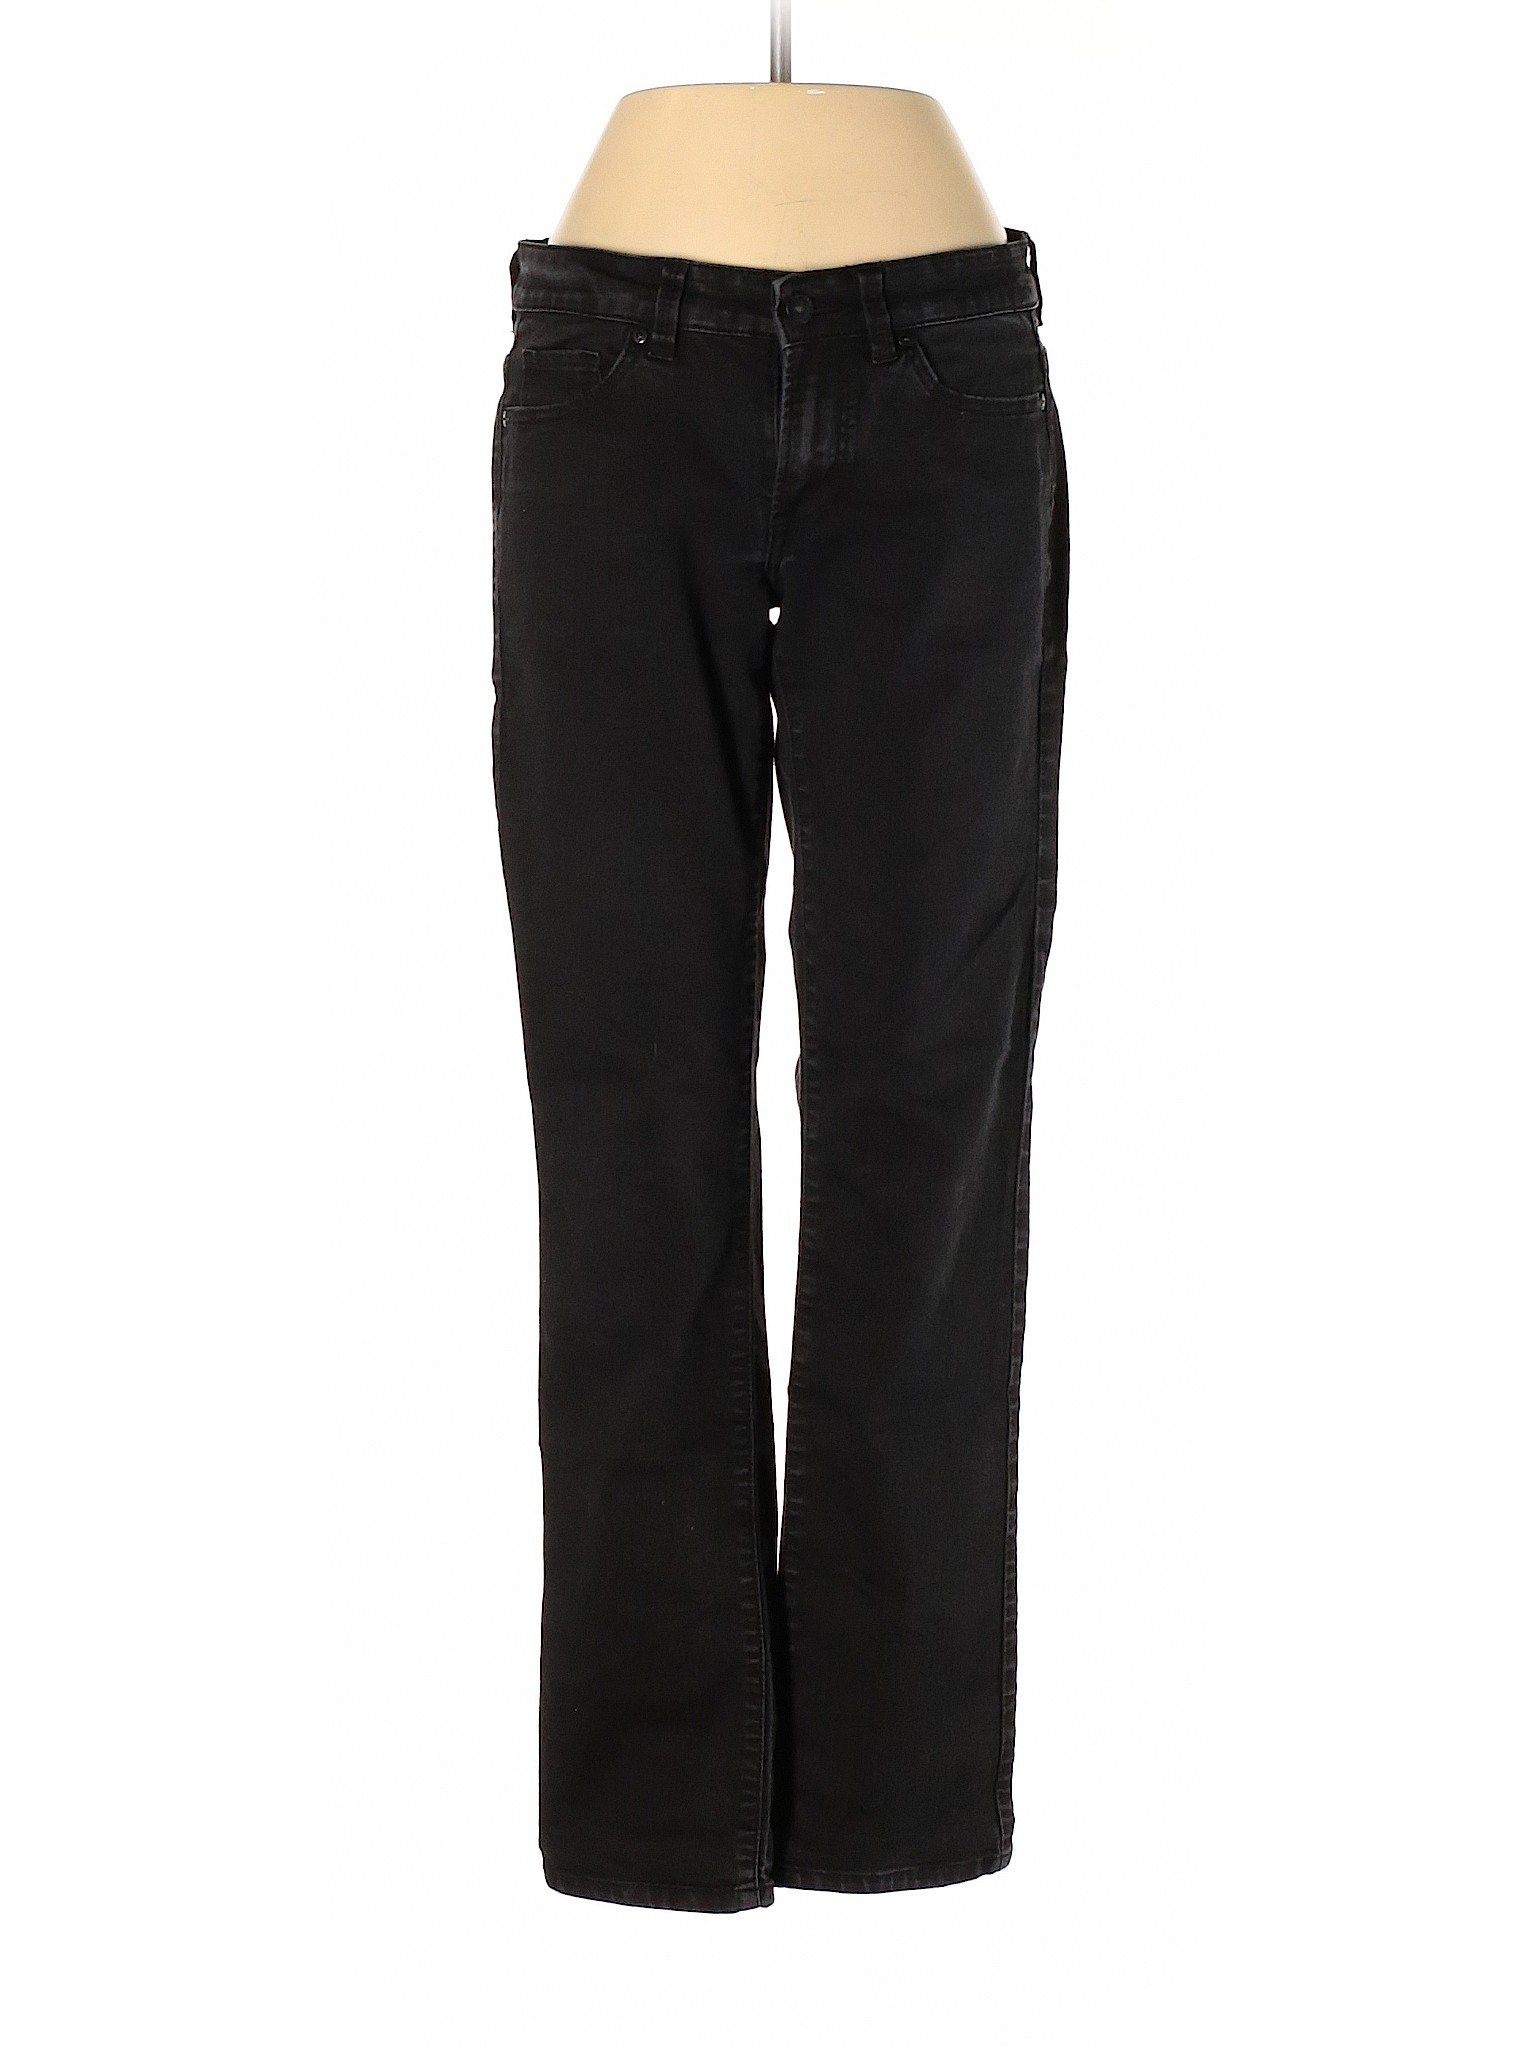 CALVIN KLEIN JEANS Women Black Jeans 2 | eBay